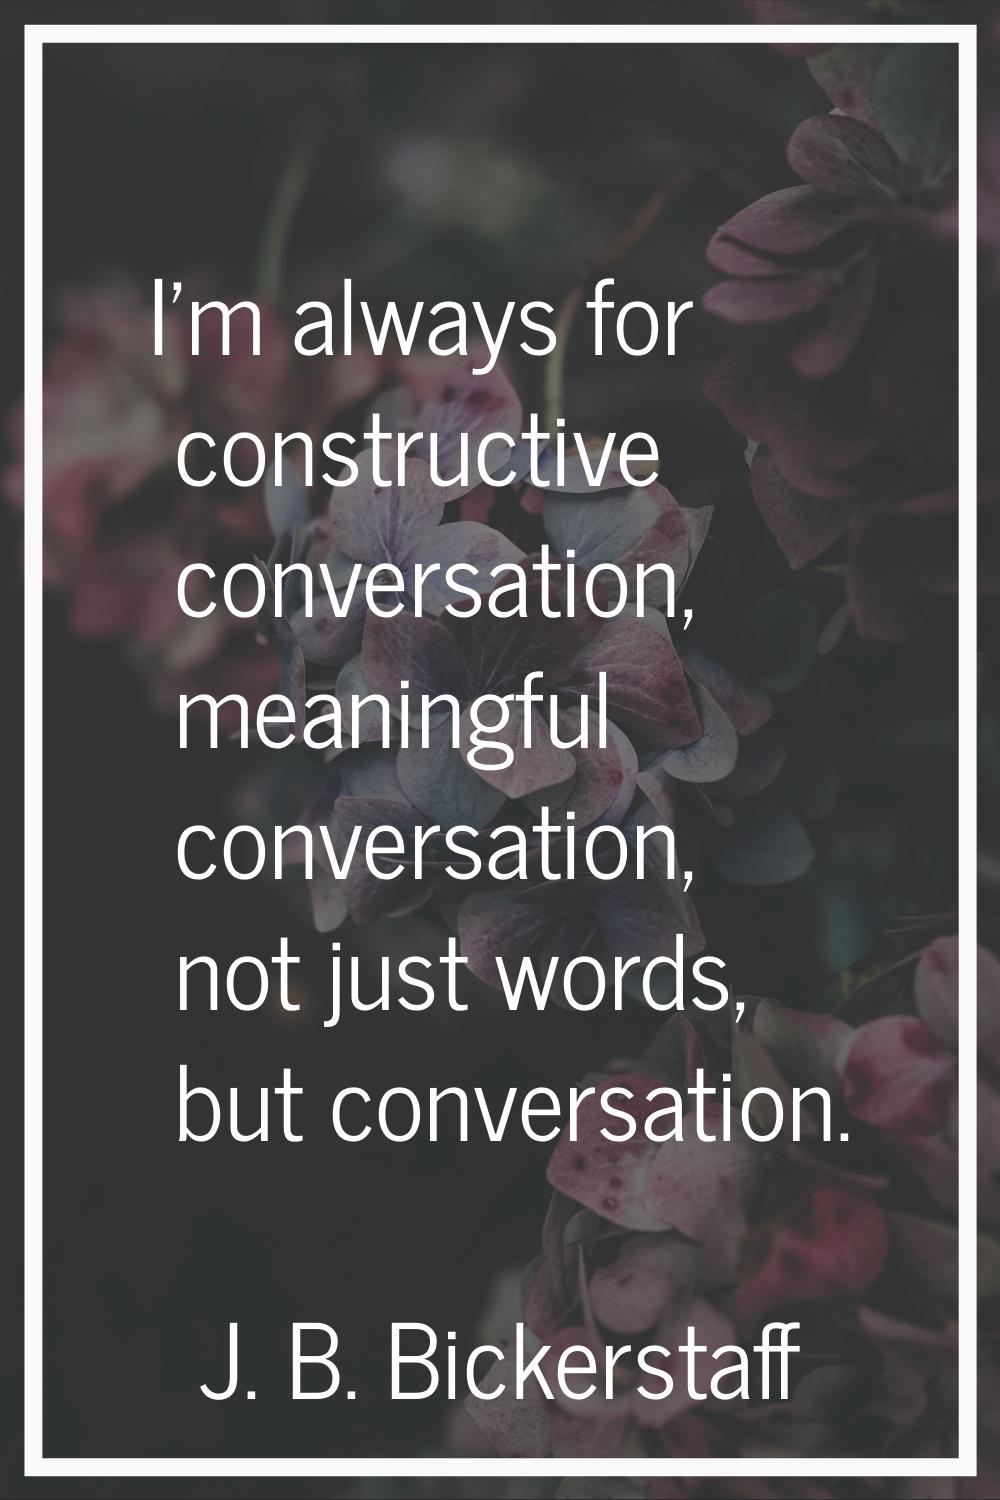 I'm always for constructive conversation, meaningful conversation, not just words, but conversation